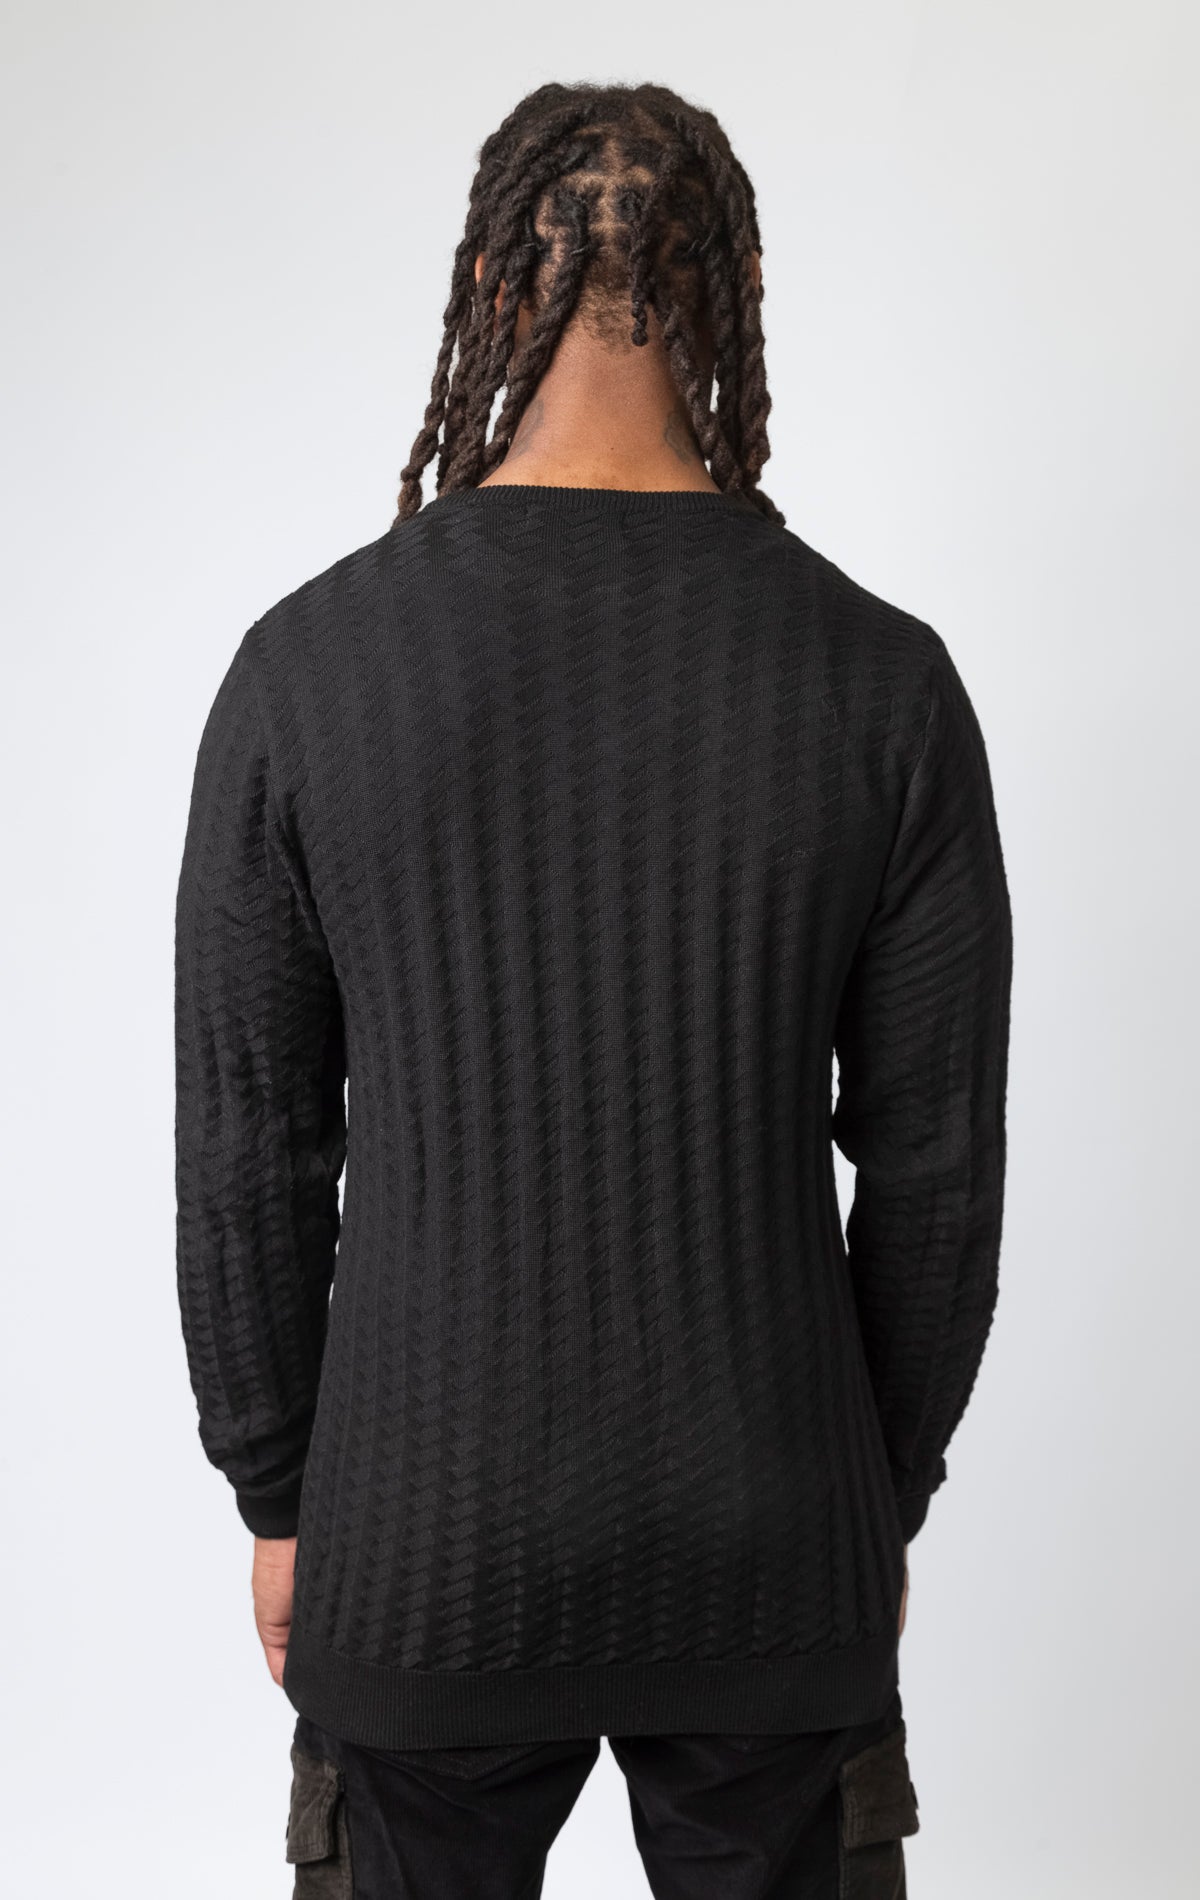  textured black crew neck sweater.